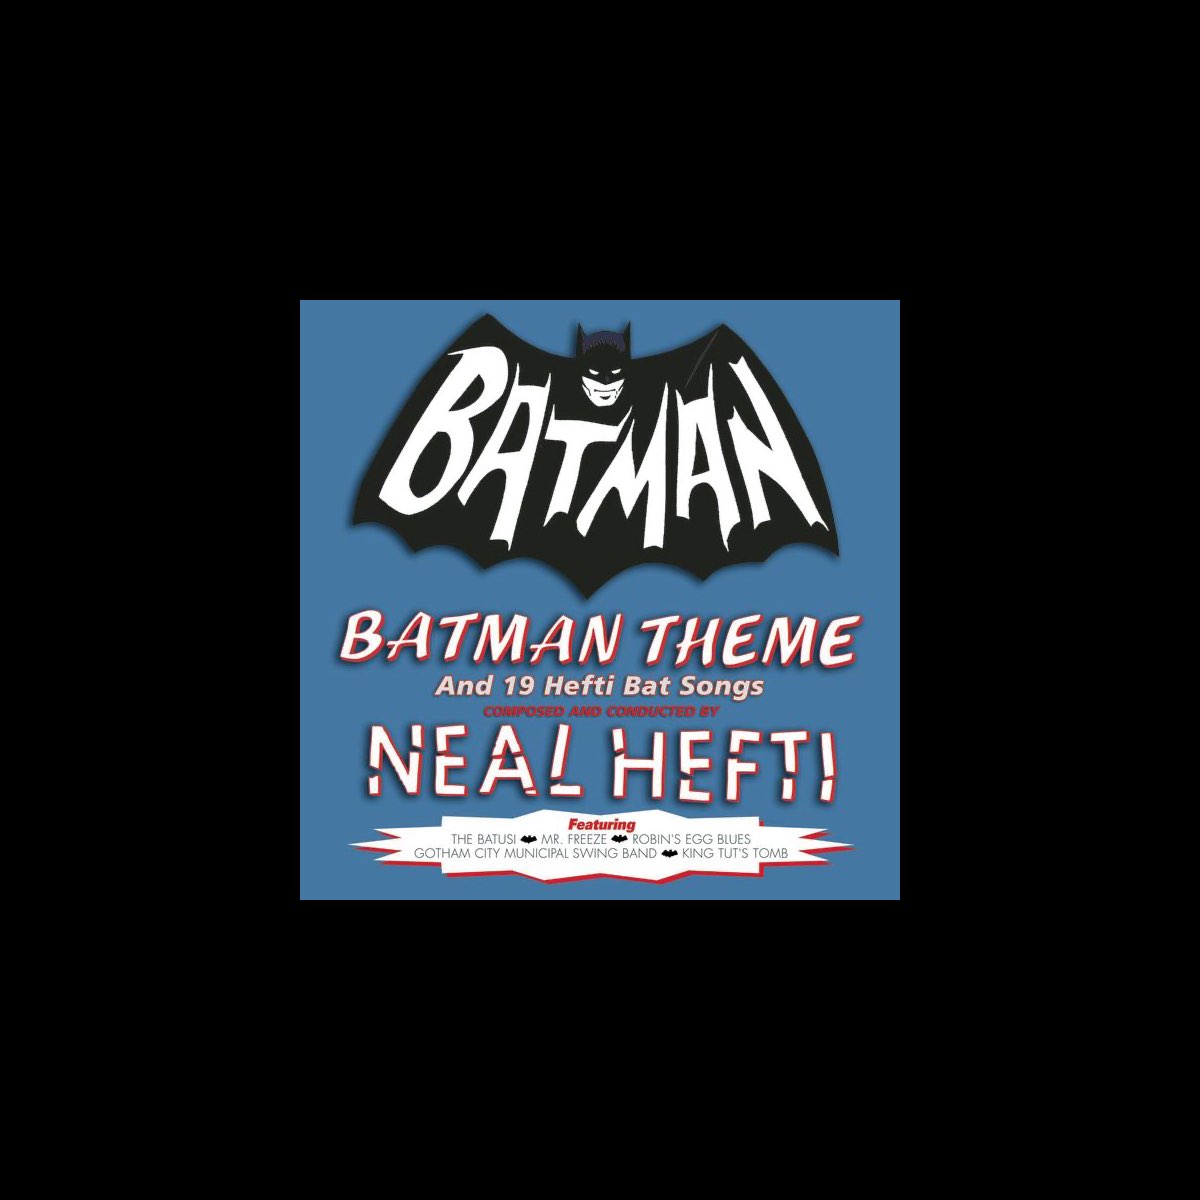 Batman Theme & 19 Hefti Bat Songs by Neal Hefti on Apple Music